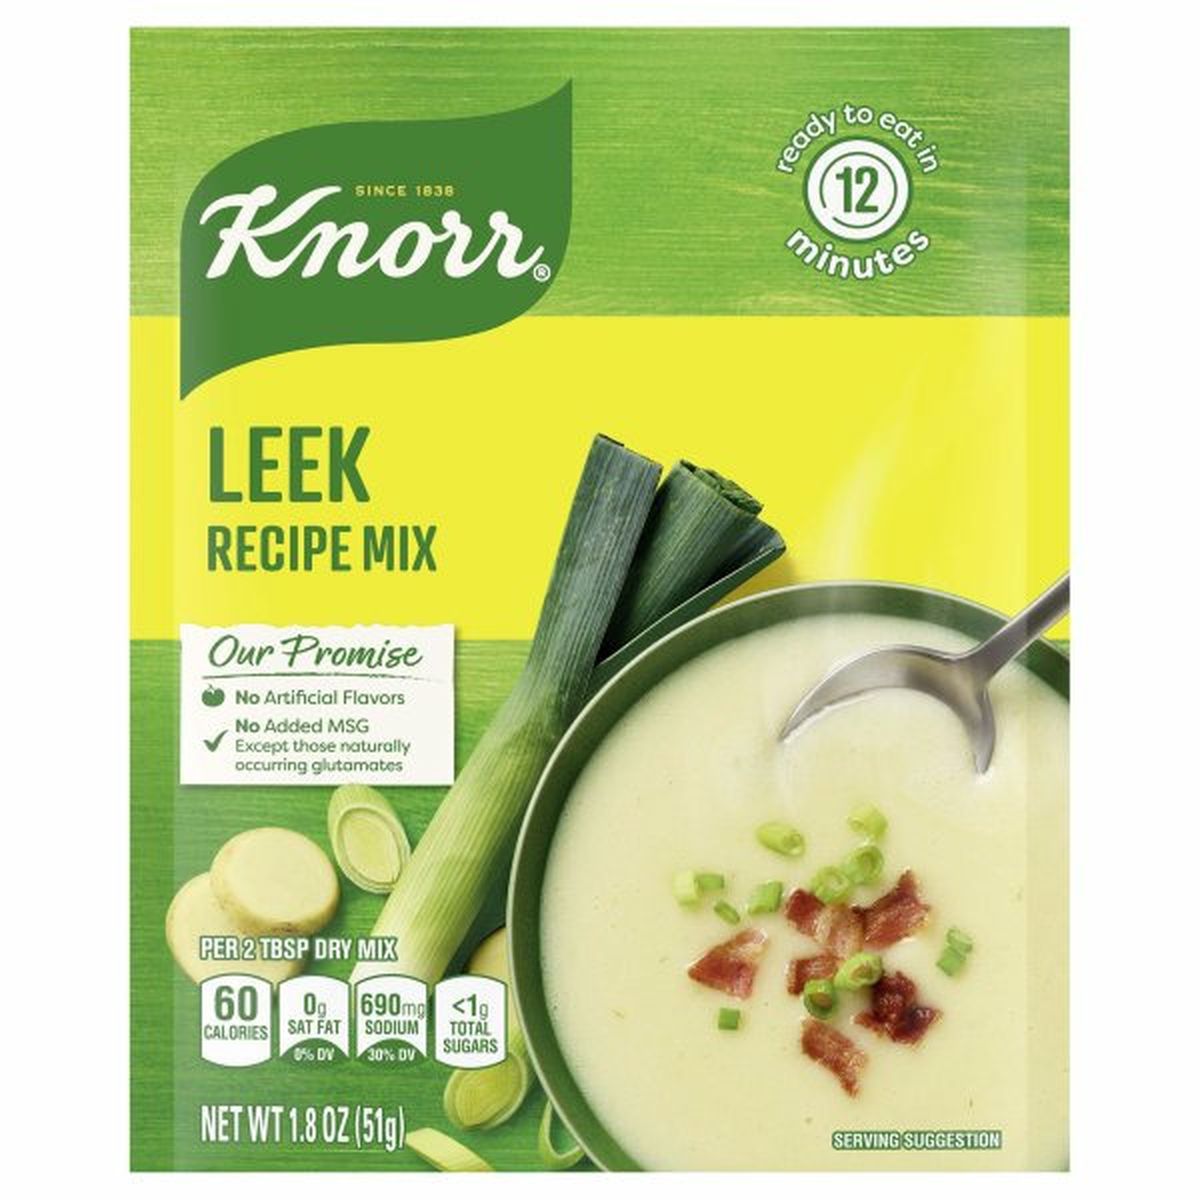 Calories in Knorr Recipe Mix, Leek